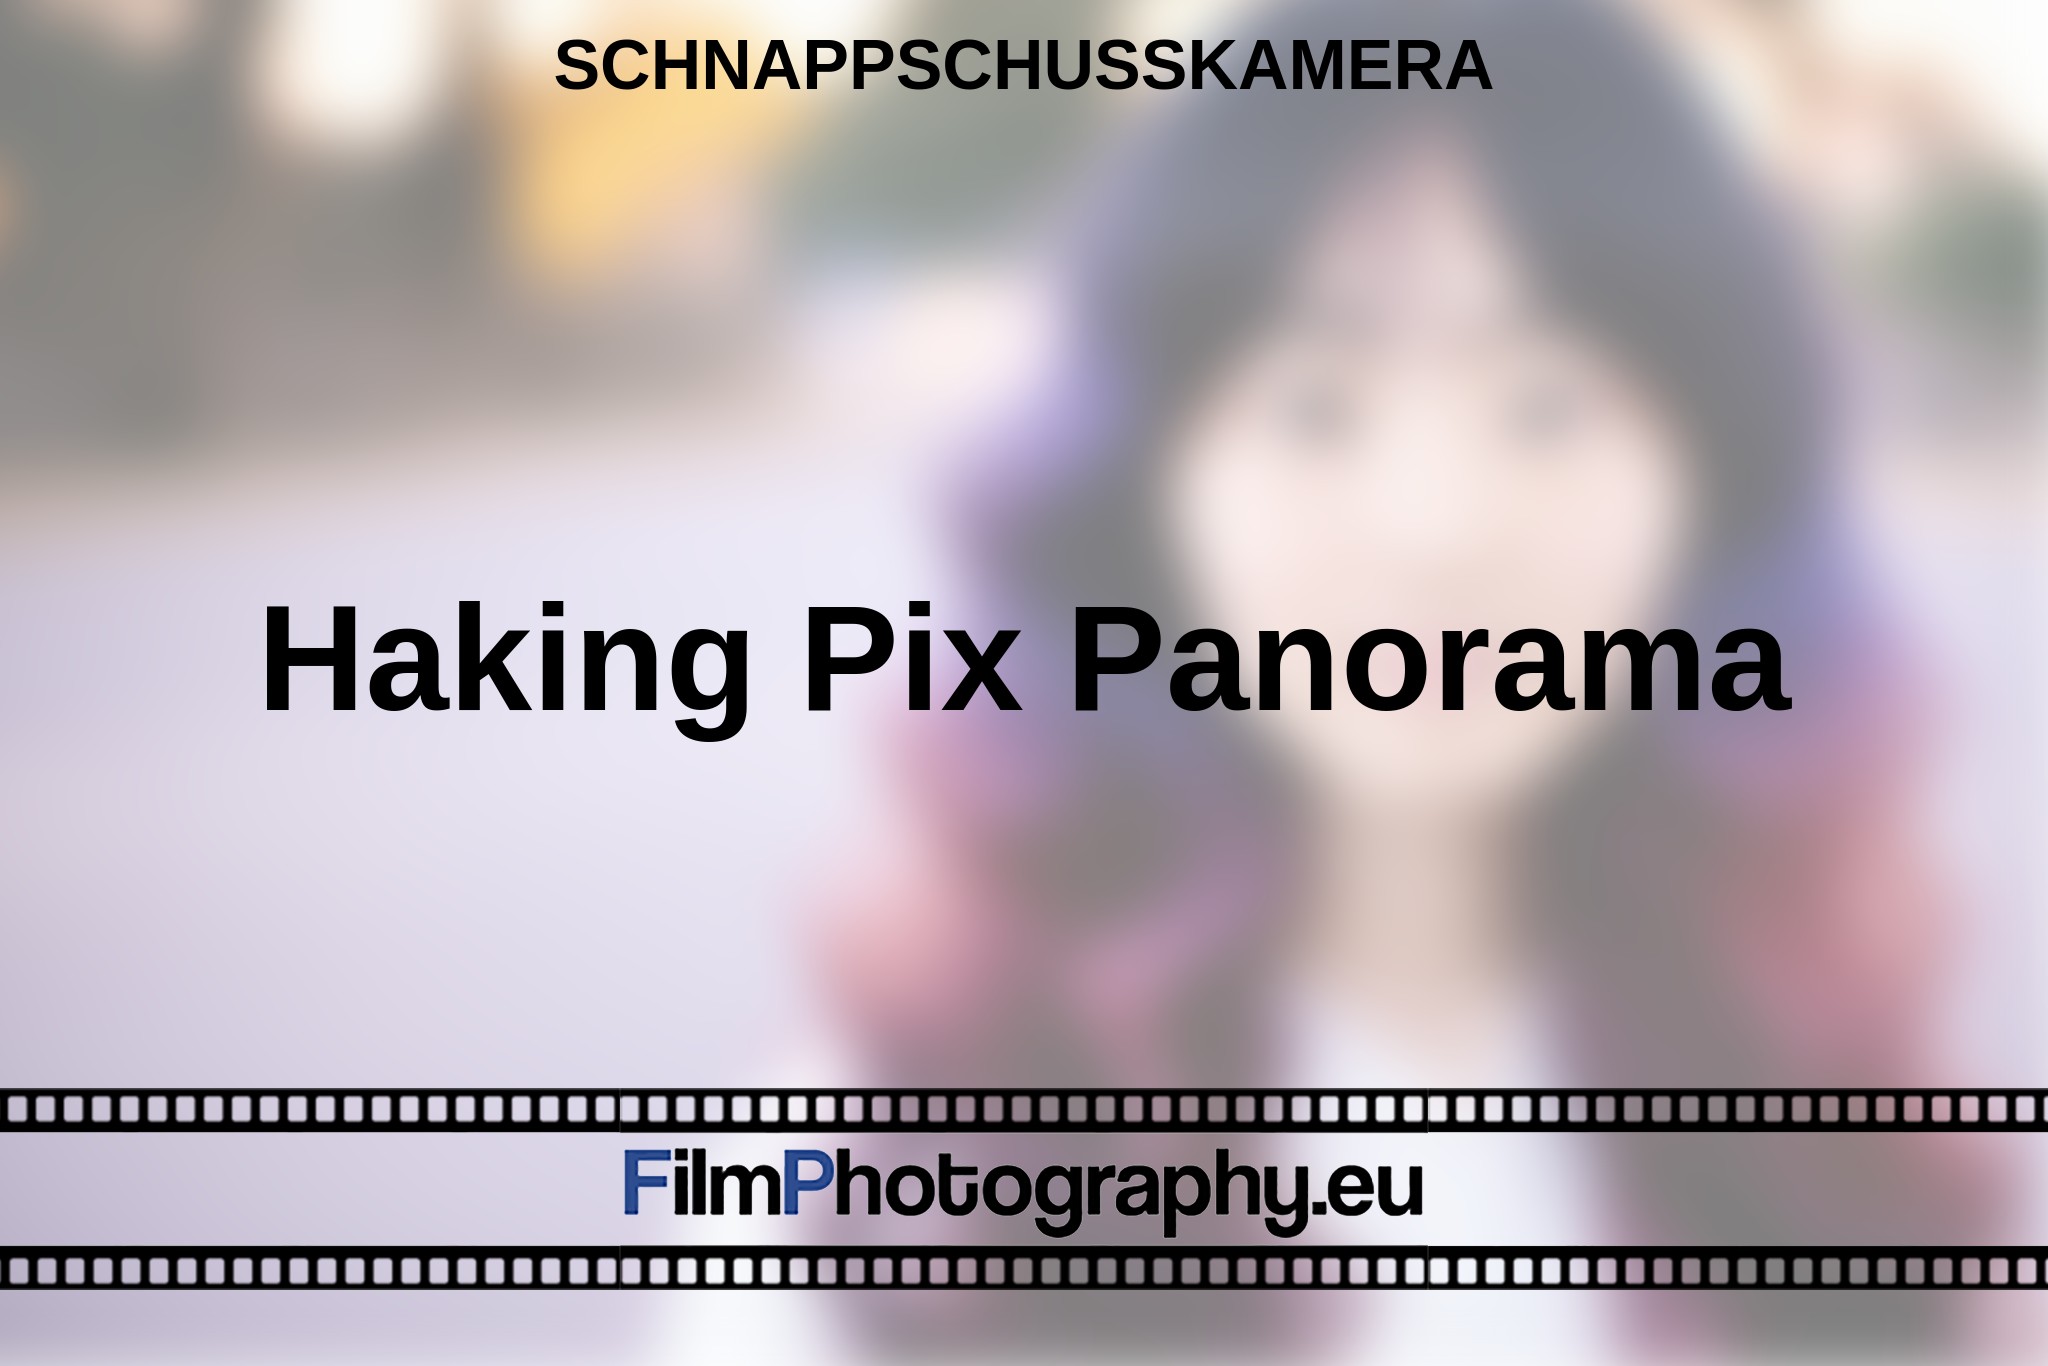 haking-pix-panorama-schnappschusskamera-bnv.jpg